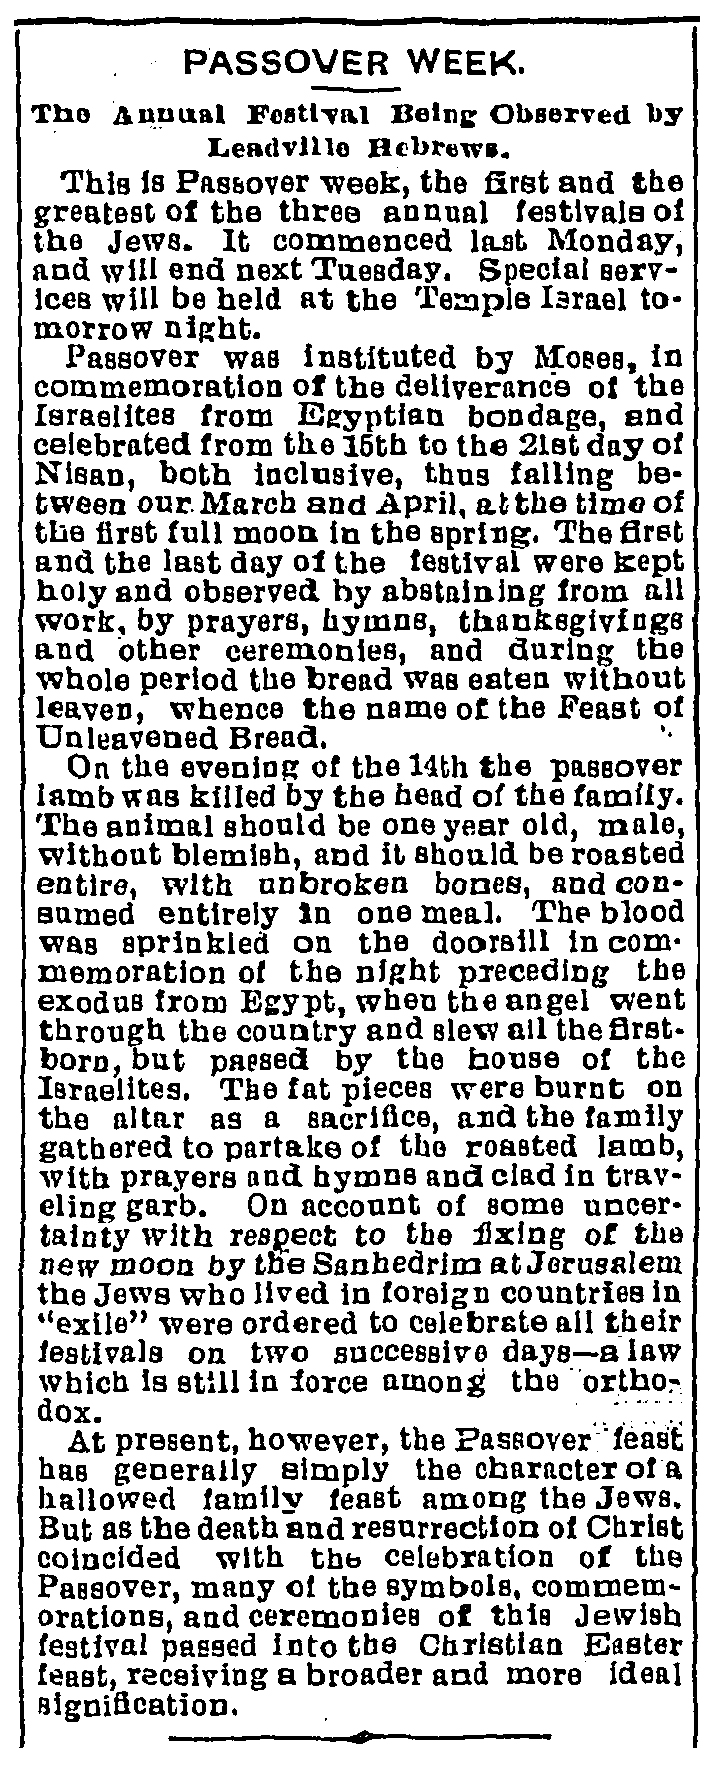 The Herald Democrat. Thursday, April 14, 1892. Page 4.